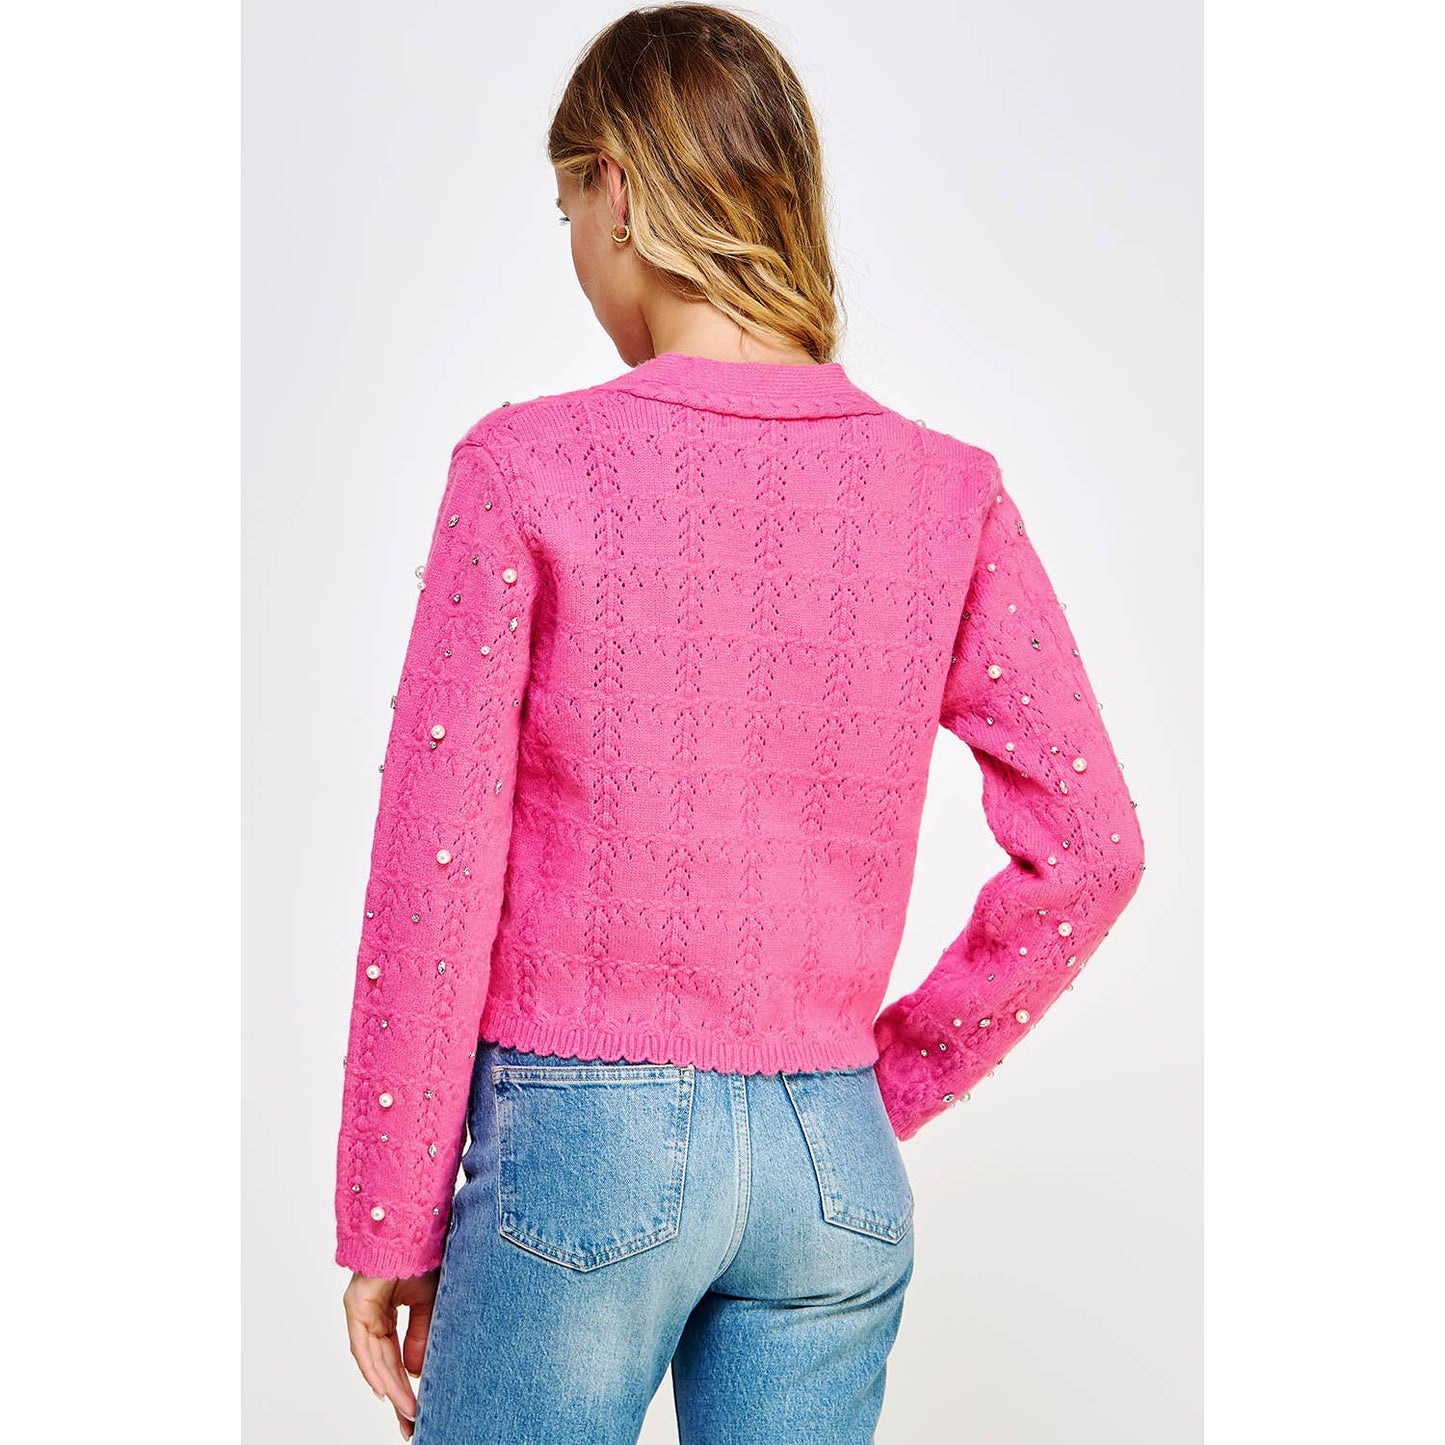 The "NOELLE" Pearl & Rhinestone Embellished Sweater in Pink